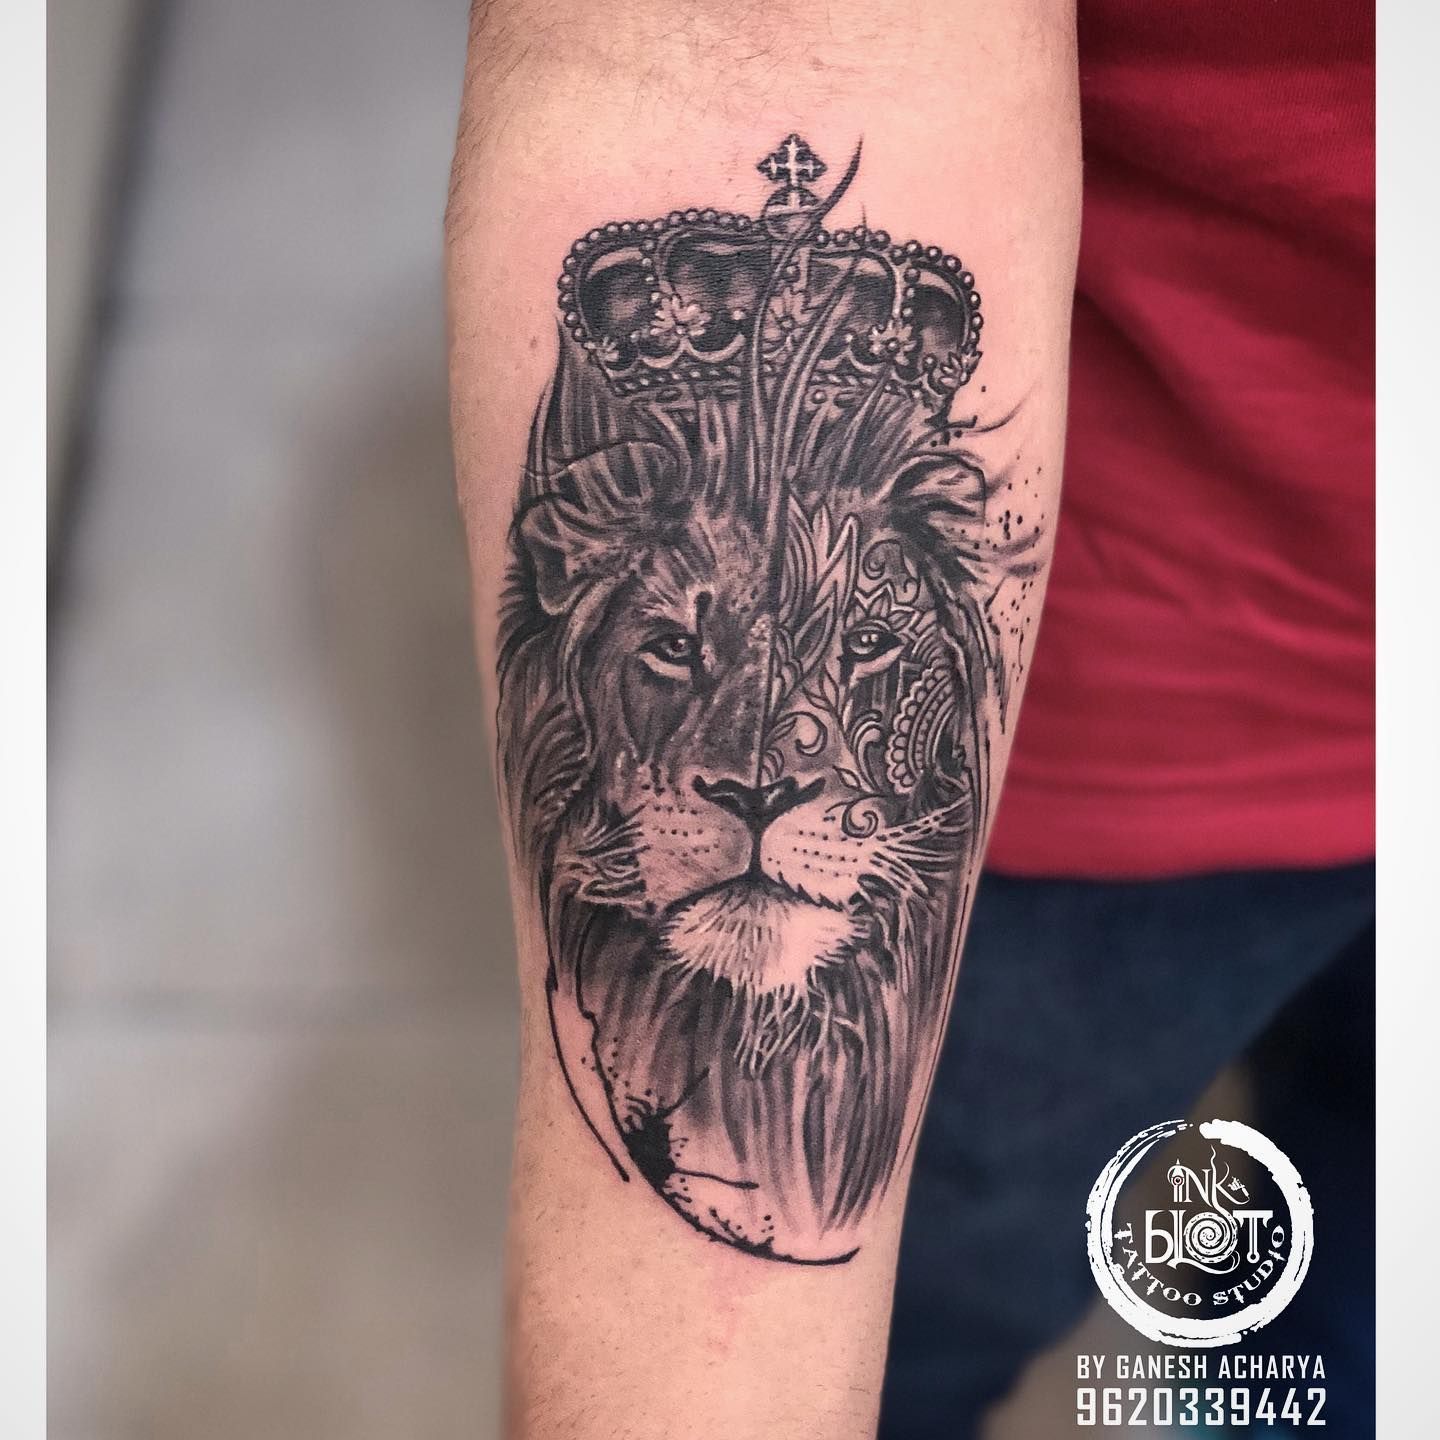 Firangi Tattoo Studio  ek tu hi nishani jeet kigurmukhi The strength  and power of the king blended with spirituality khanda lion tattoo  king spritual punjabi liontattoo tribal firangiart 9999724279   Facebook